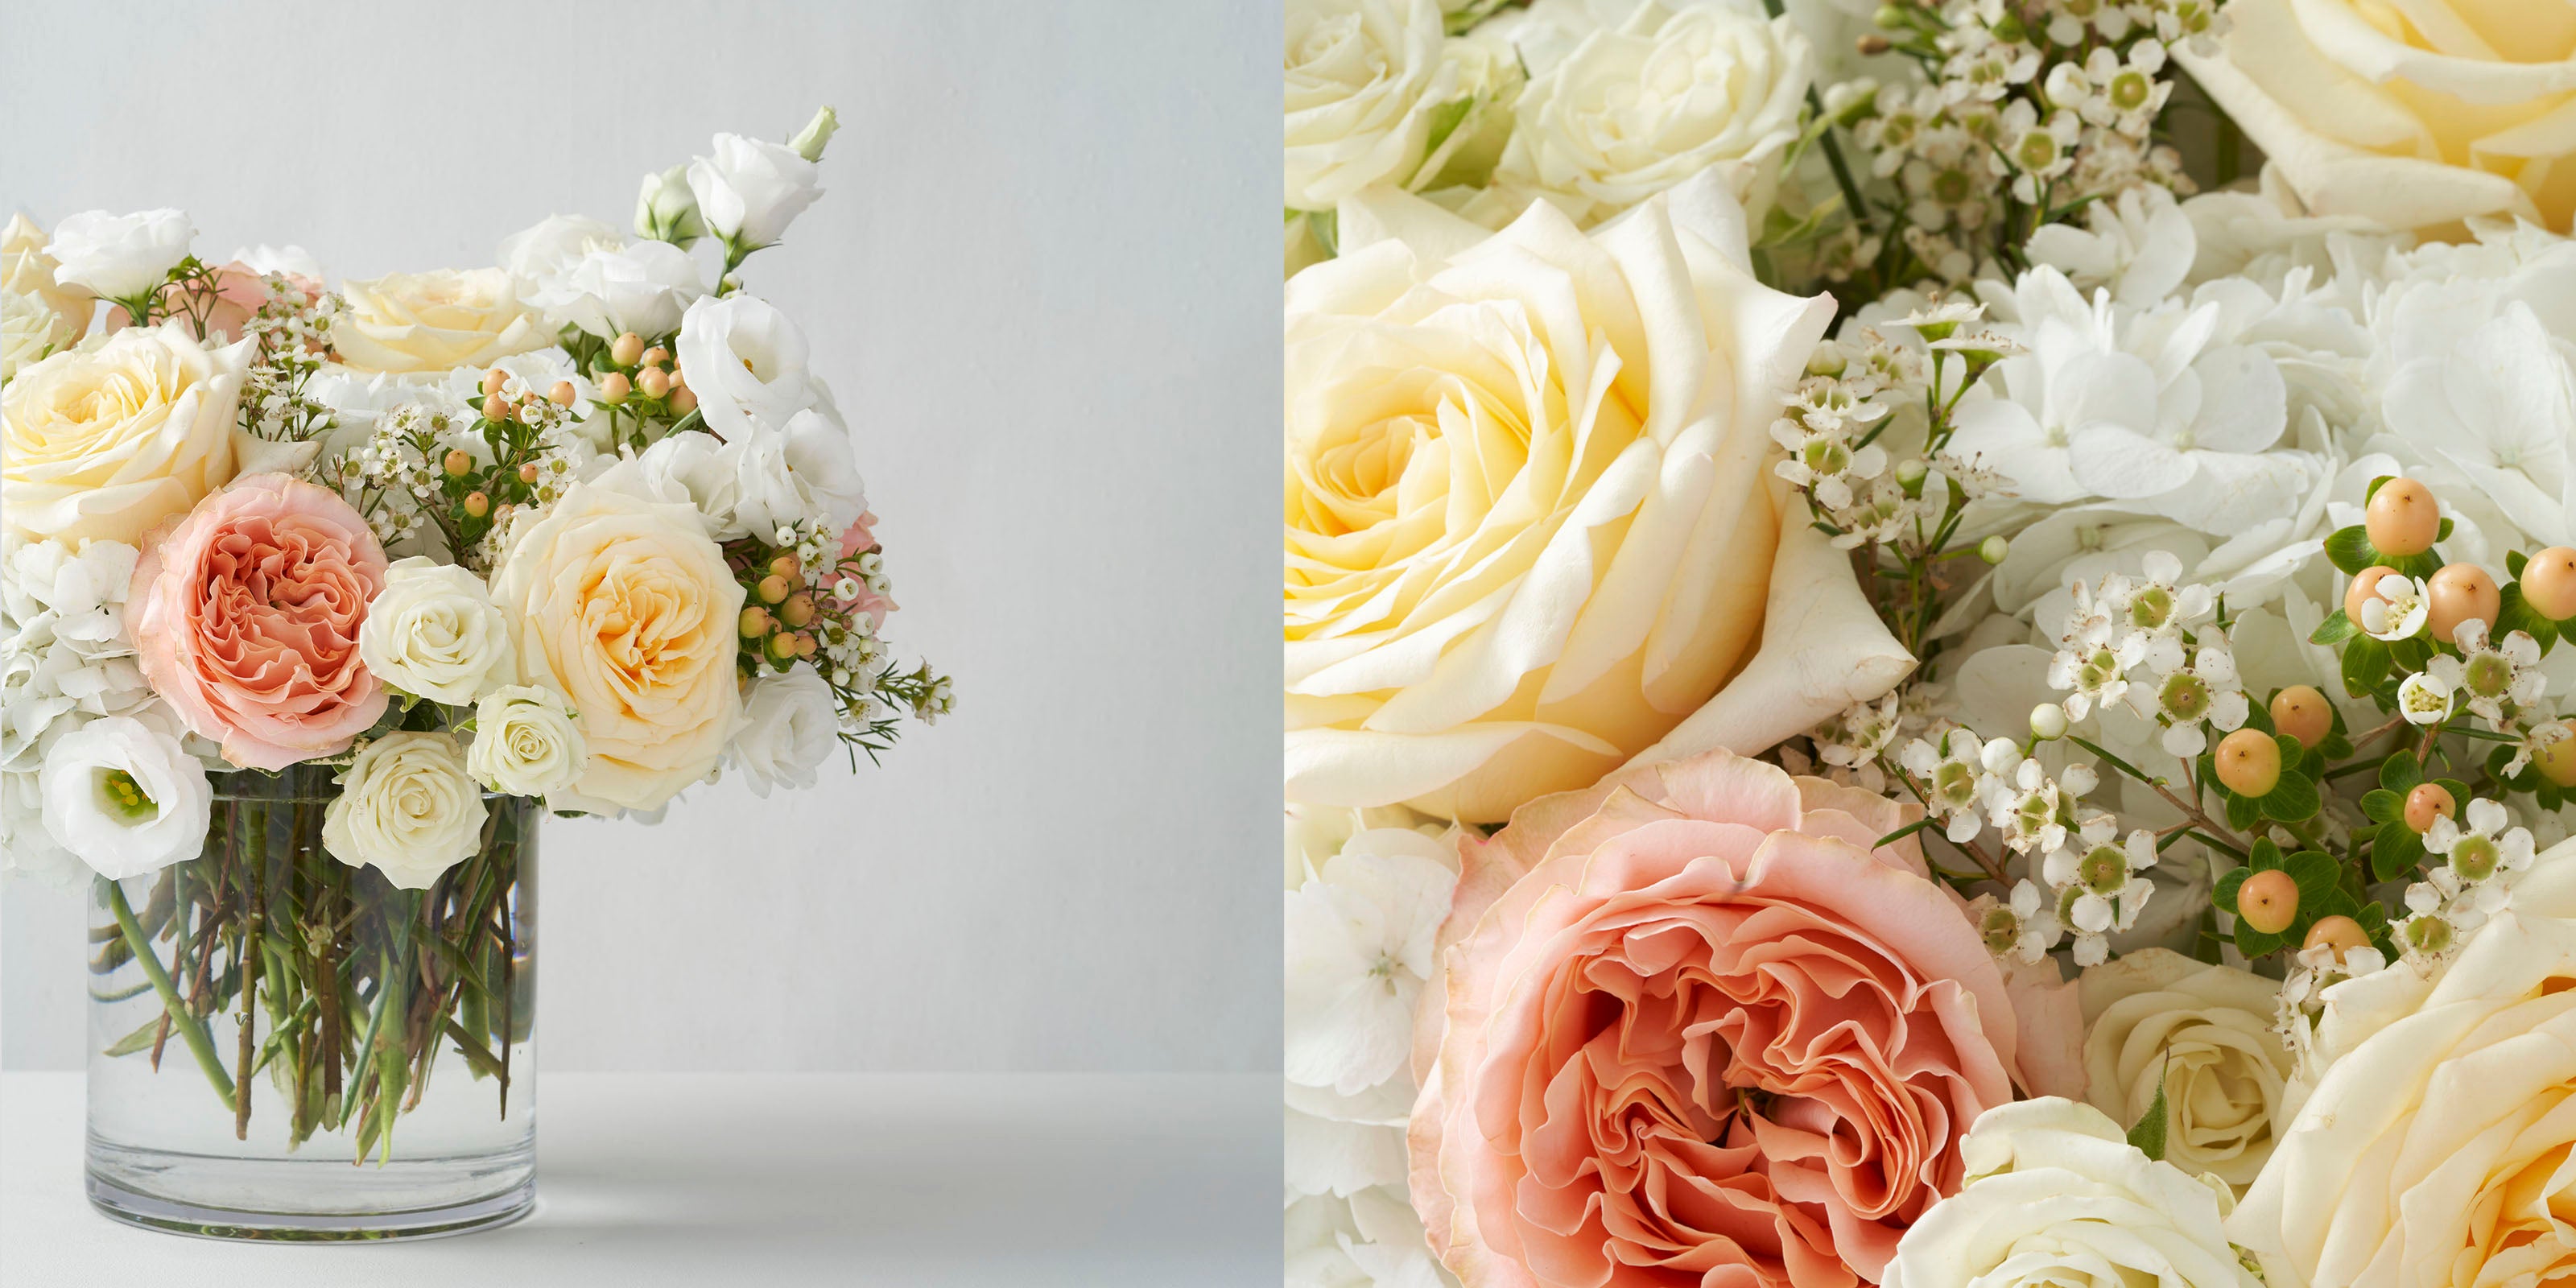 Peach and cream colour flower arrangment featuring roses, hydrangeas and lisianthus.